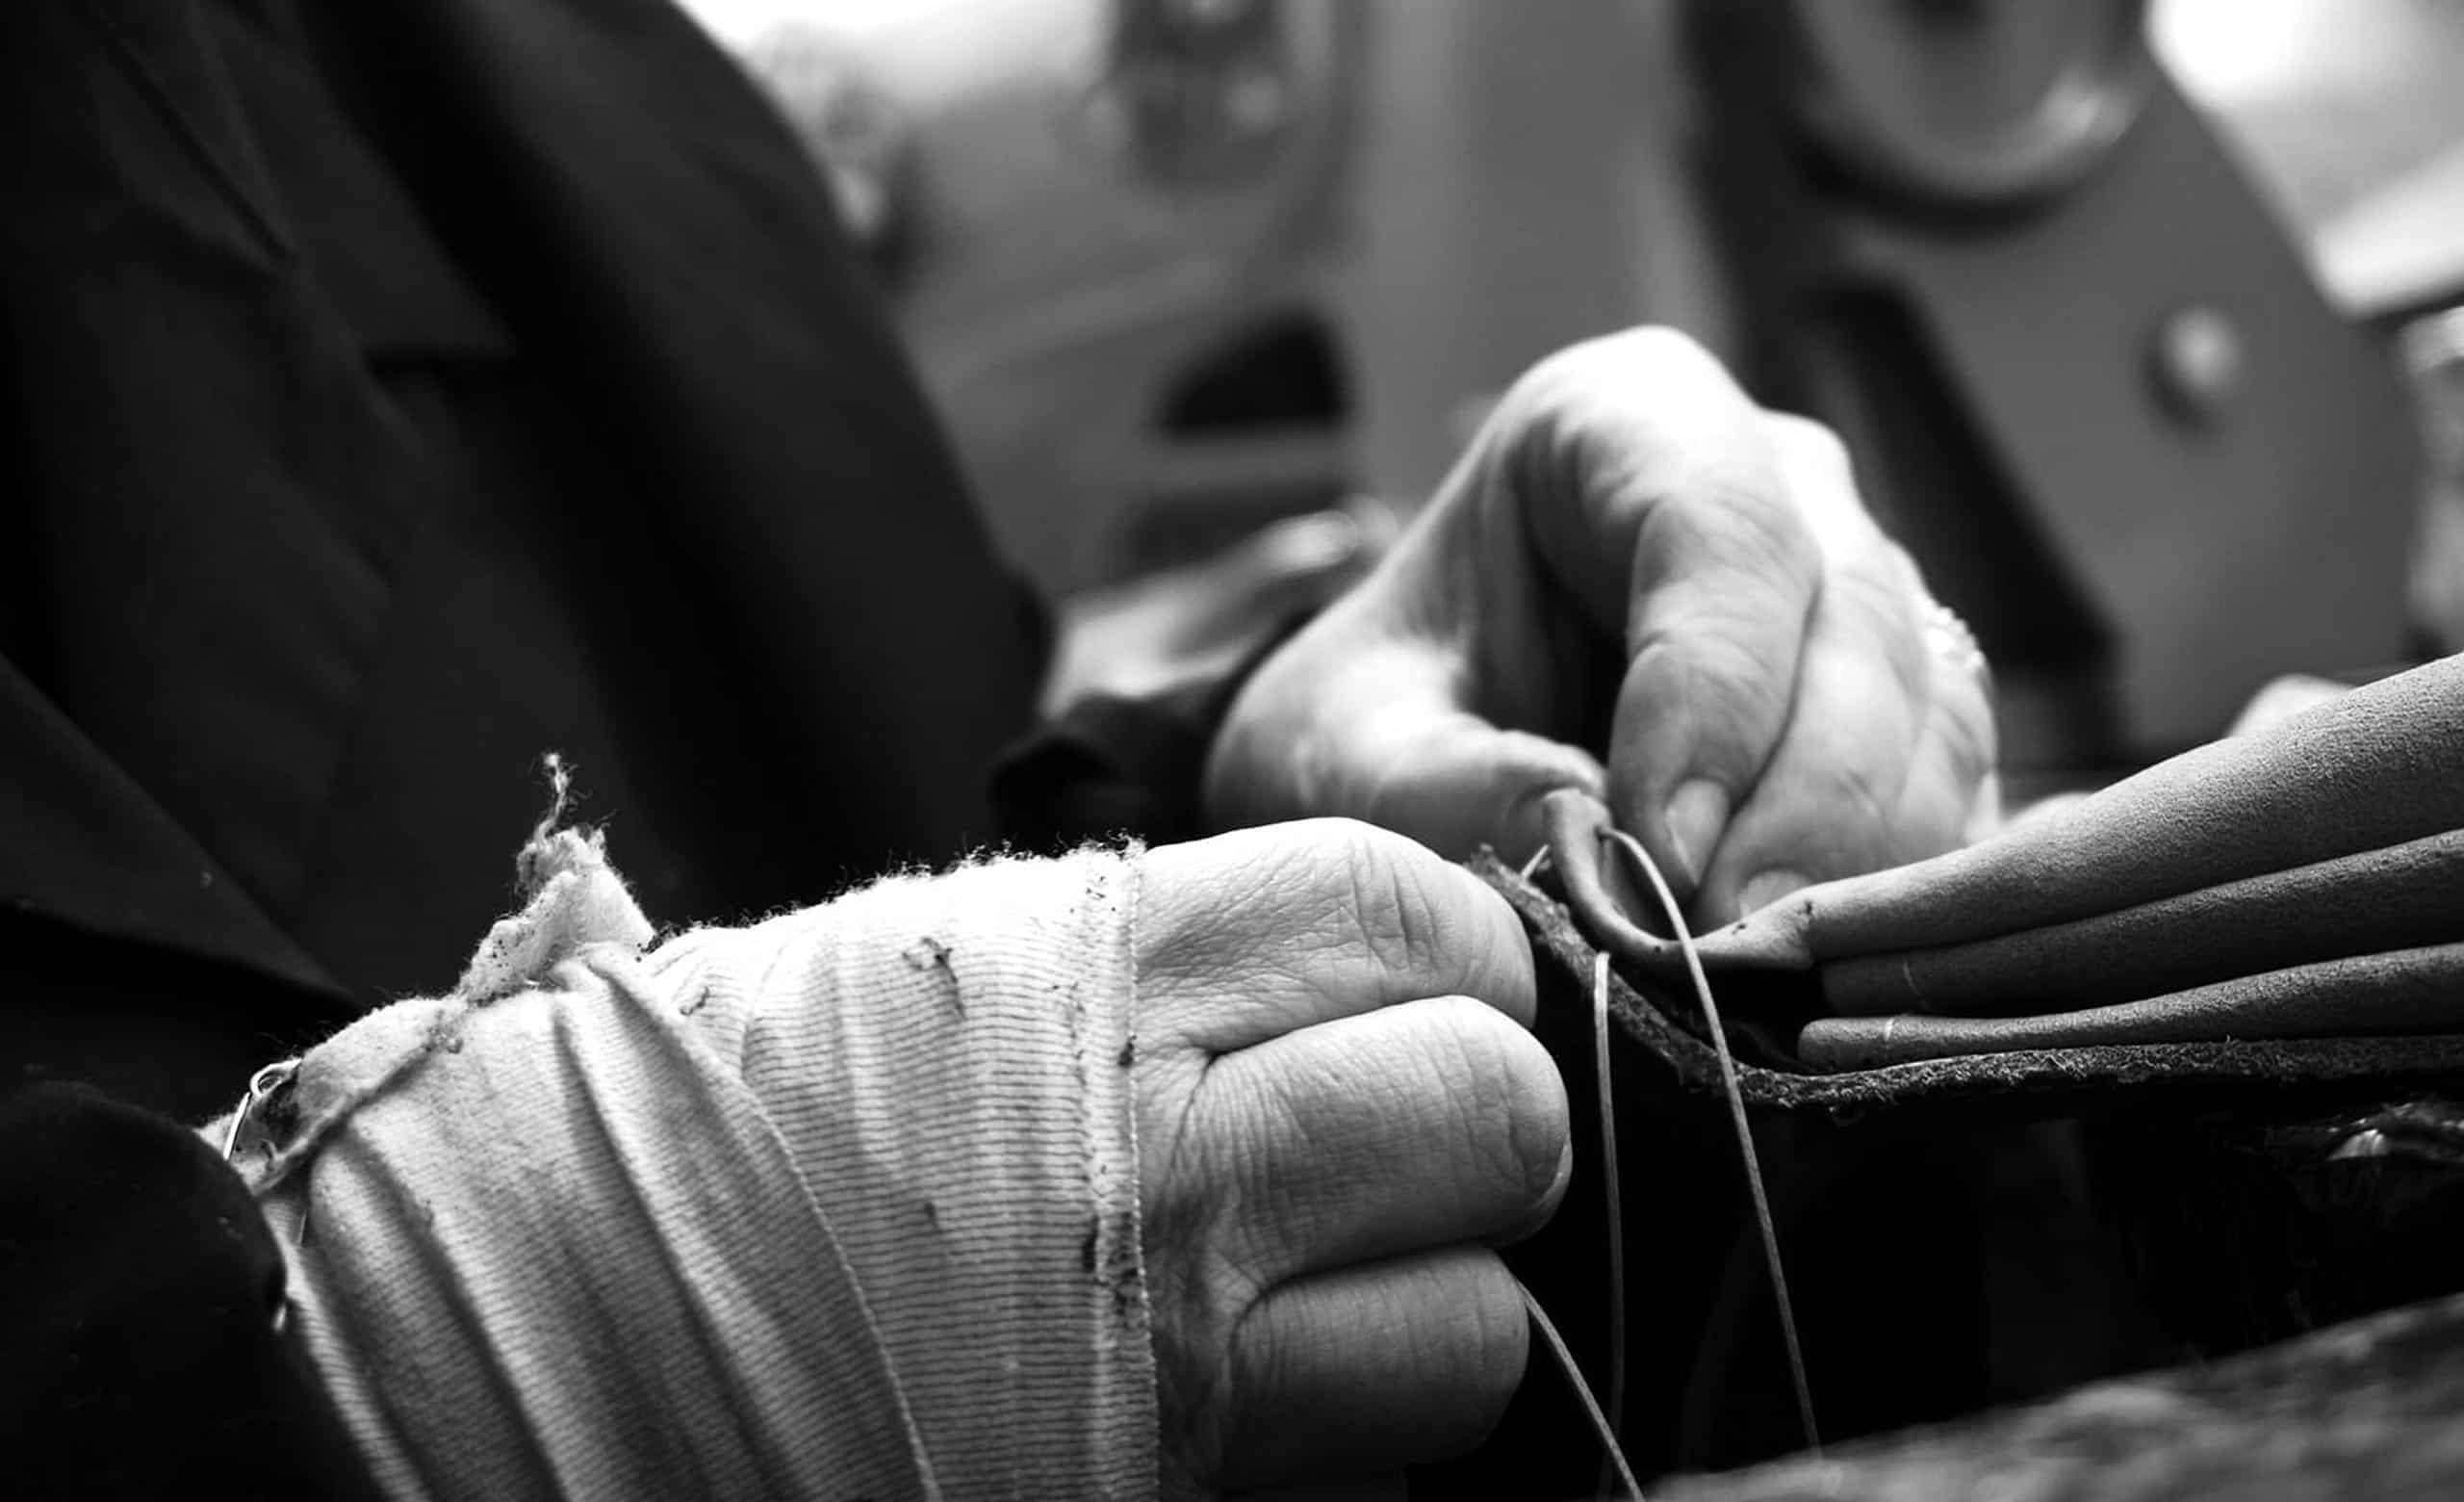 Daniele Basta hand stitching